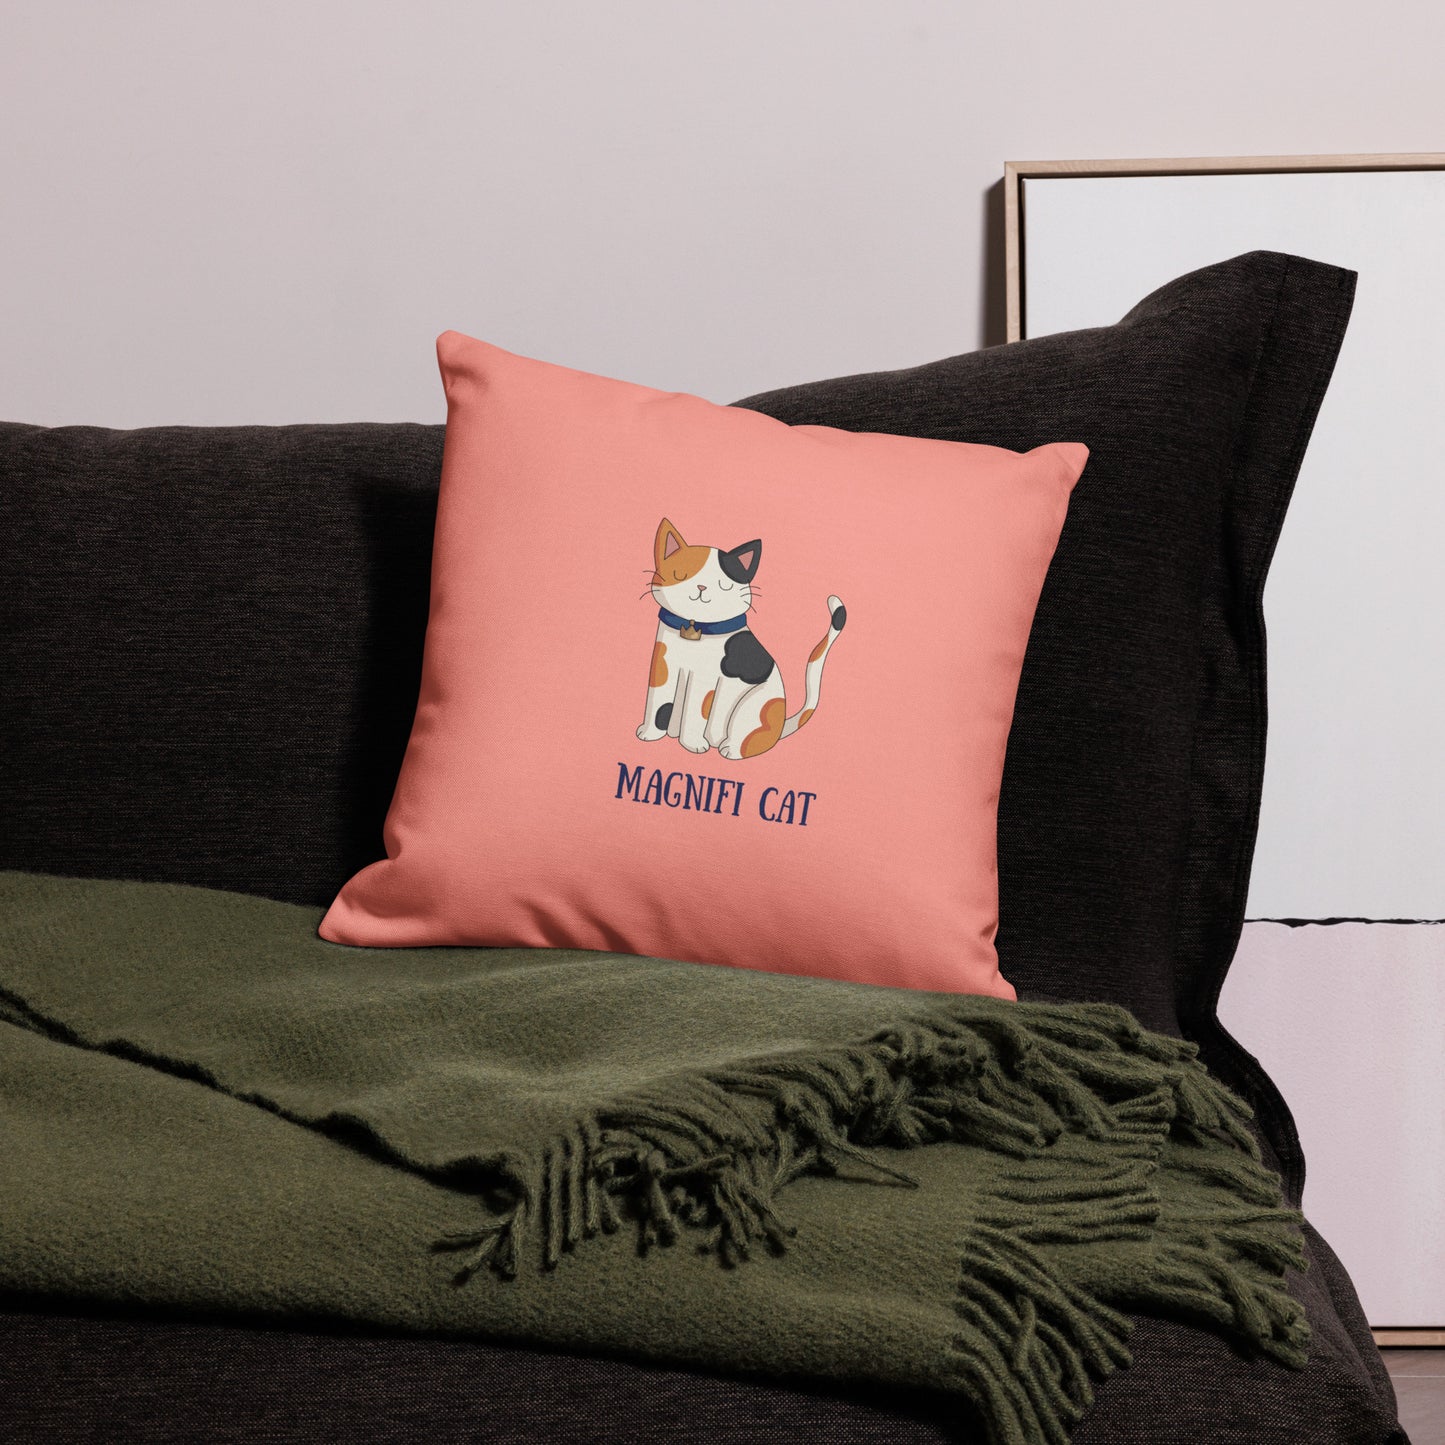 The Festive Feline Cushion: Magnifi Cat + Word